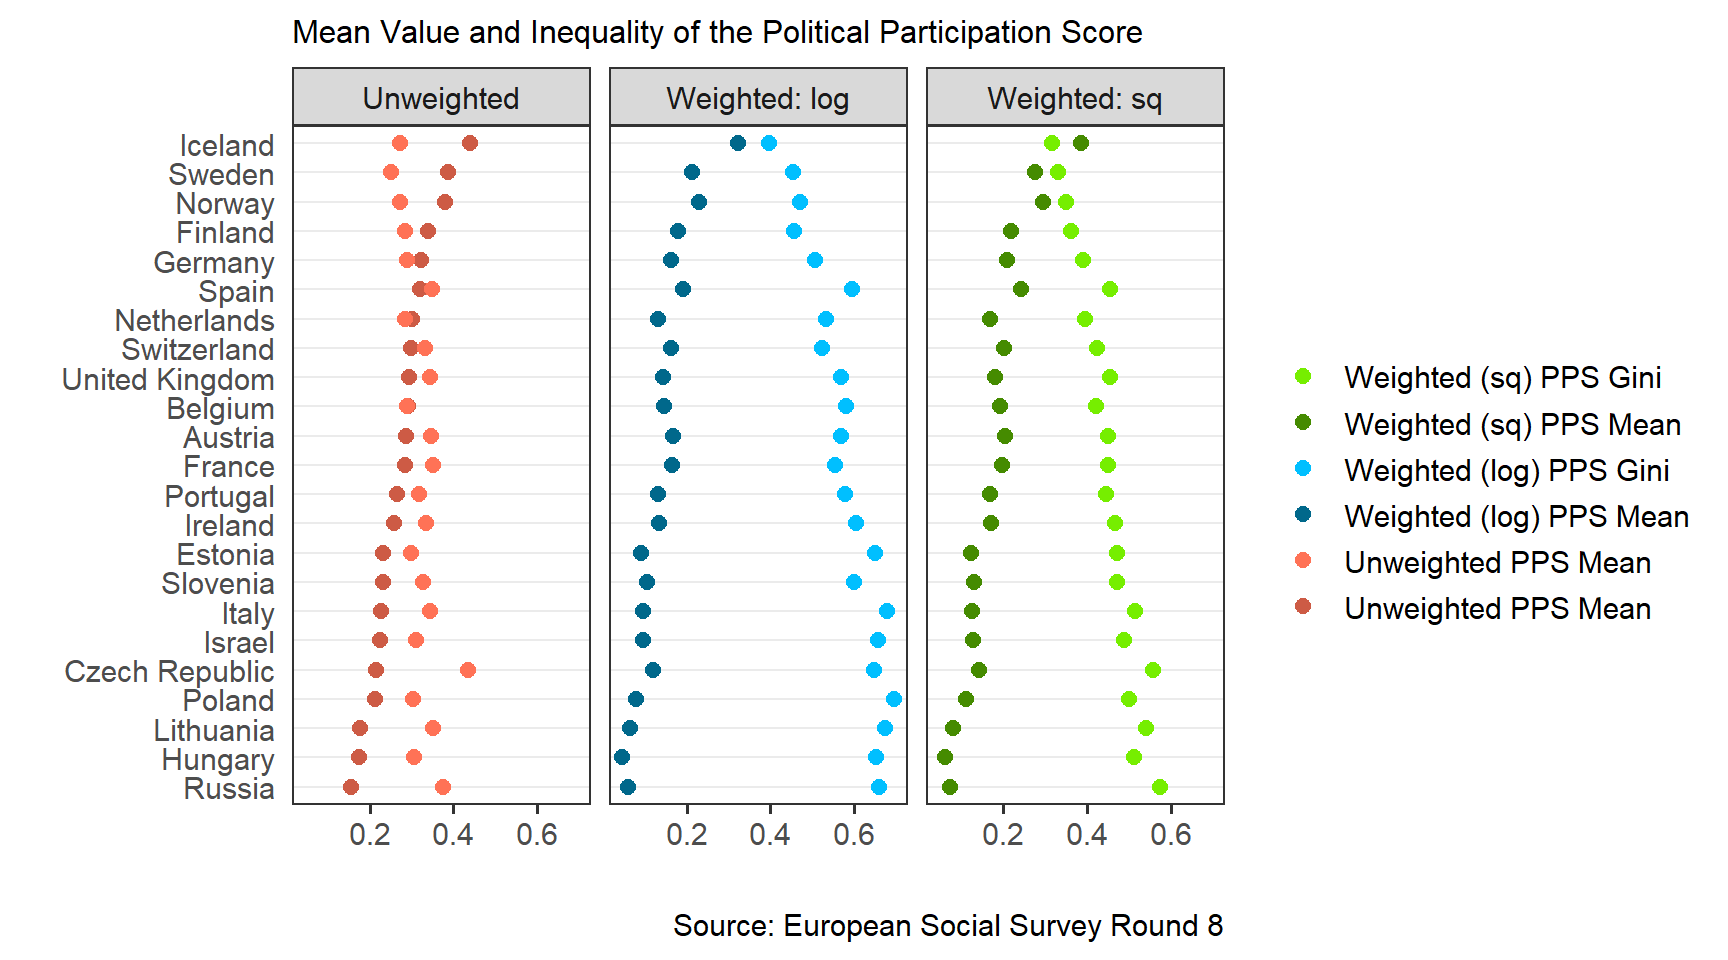 Pps Score Chart